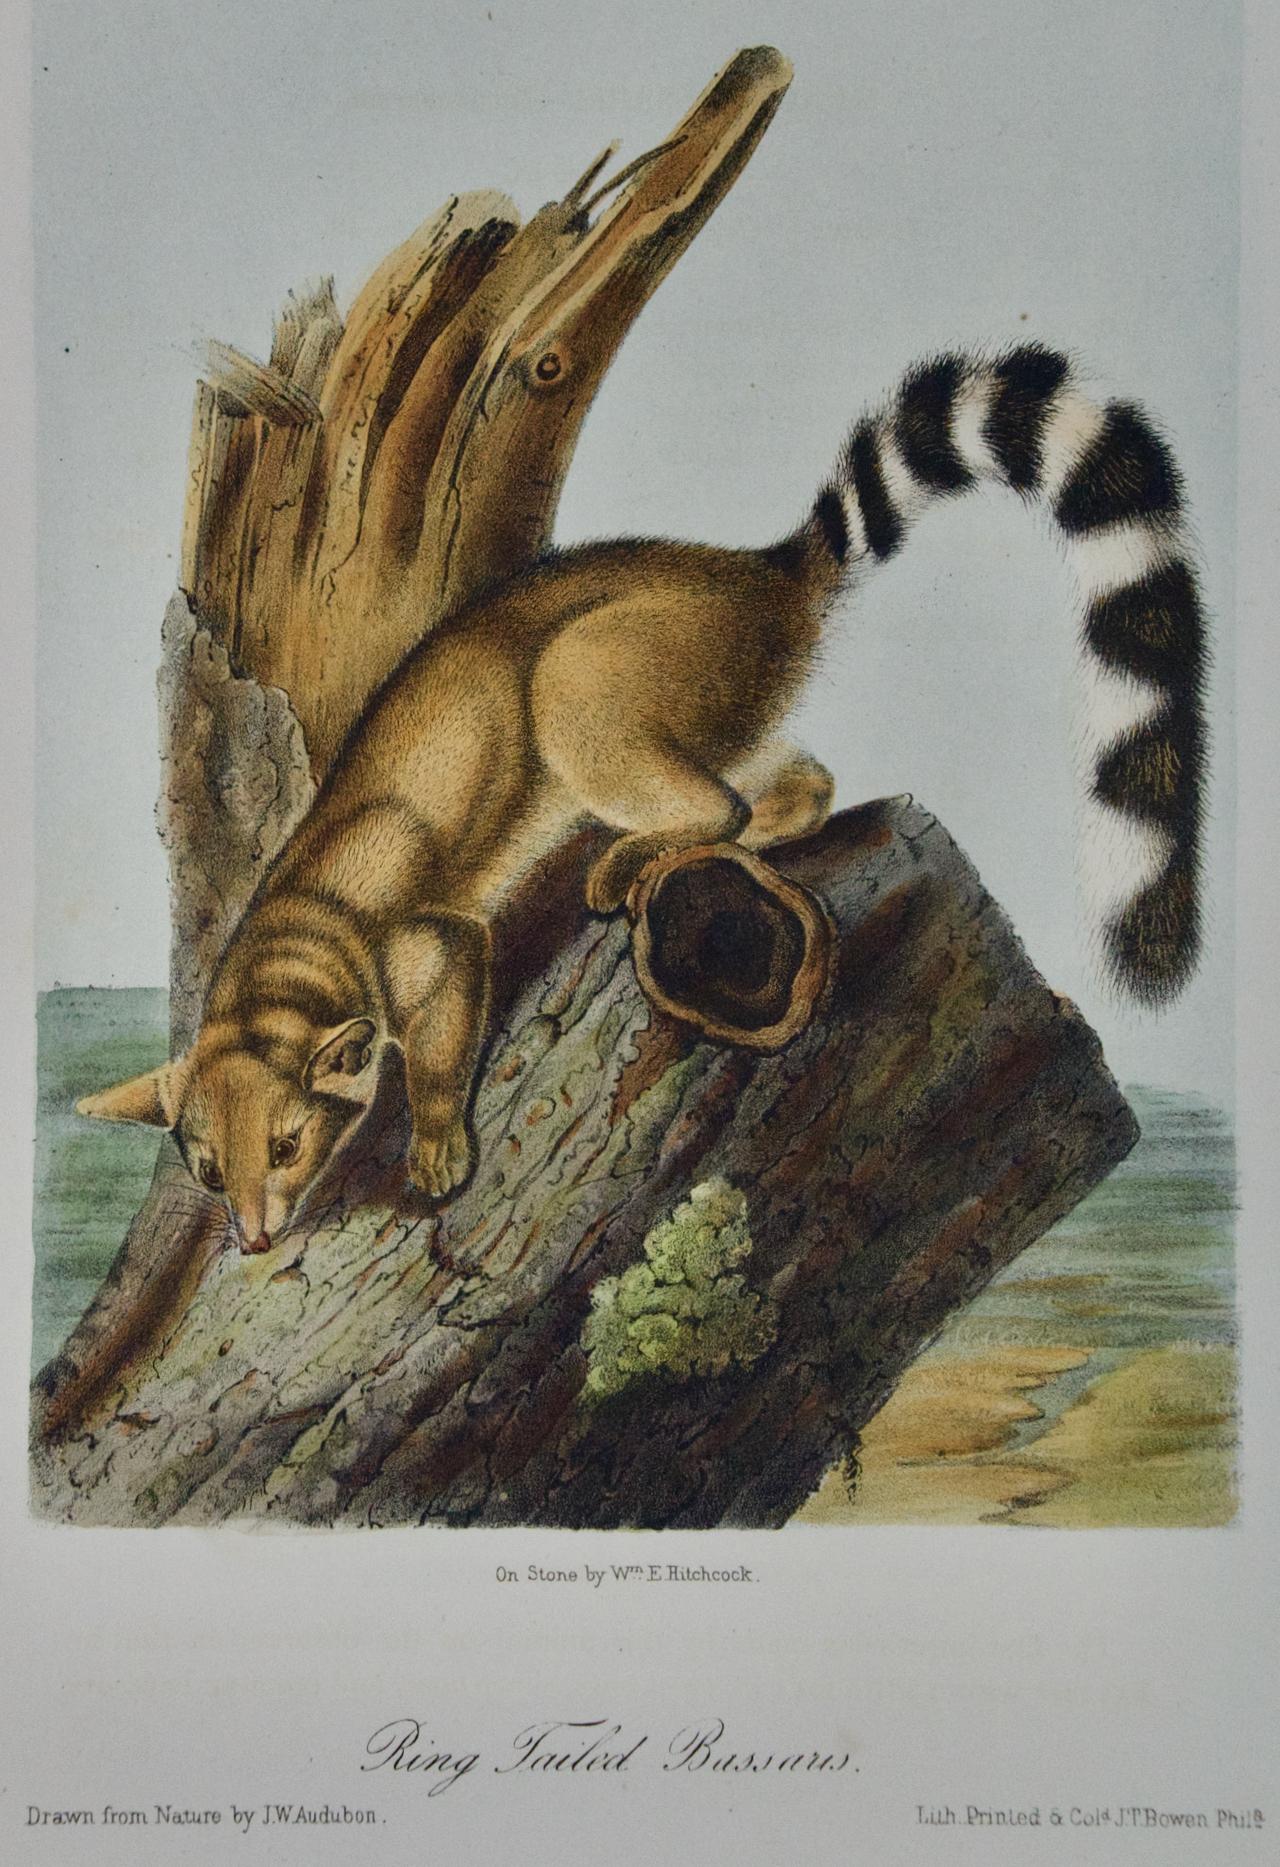 Ring-Tailed Bassaris: An Original Audubon Hand-colored Lithograph - Print by John James Audubon